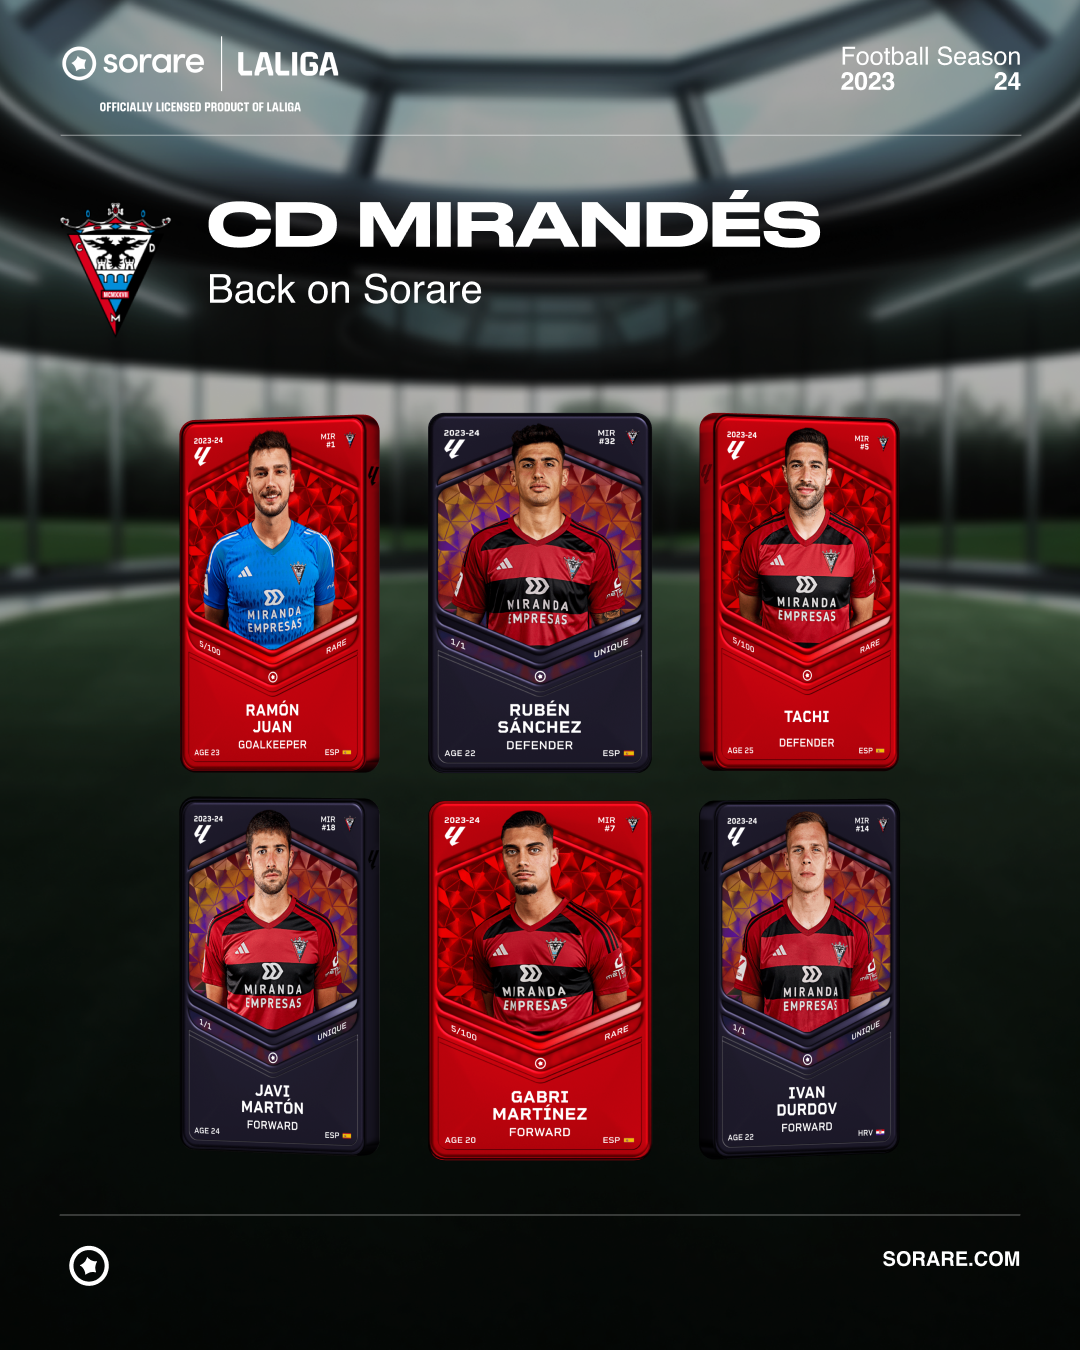 CD Mirandés vuelve a Sorare en la temporada de fútbol 2023-24